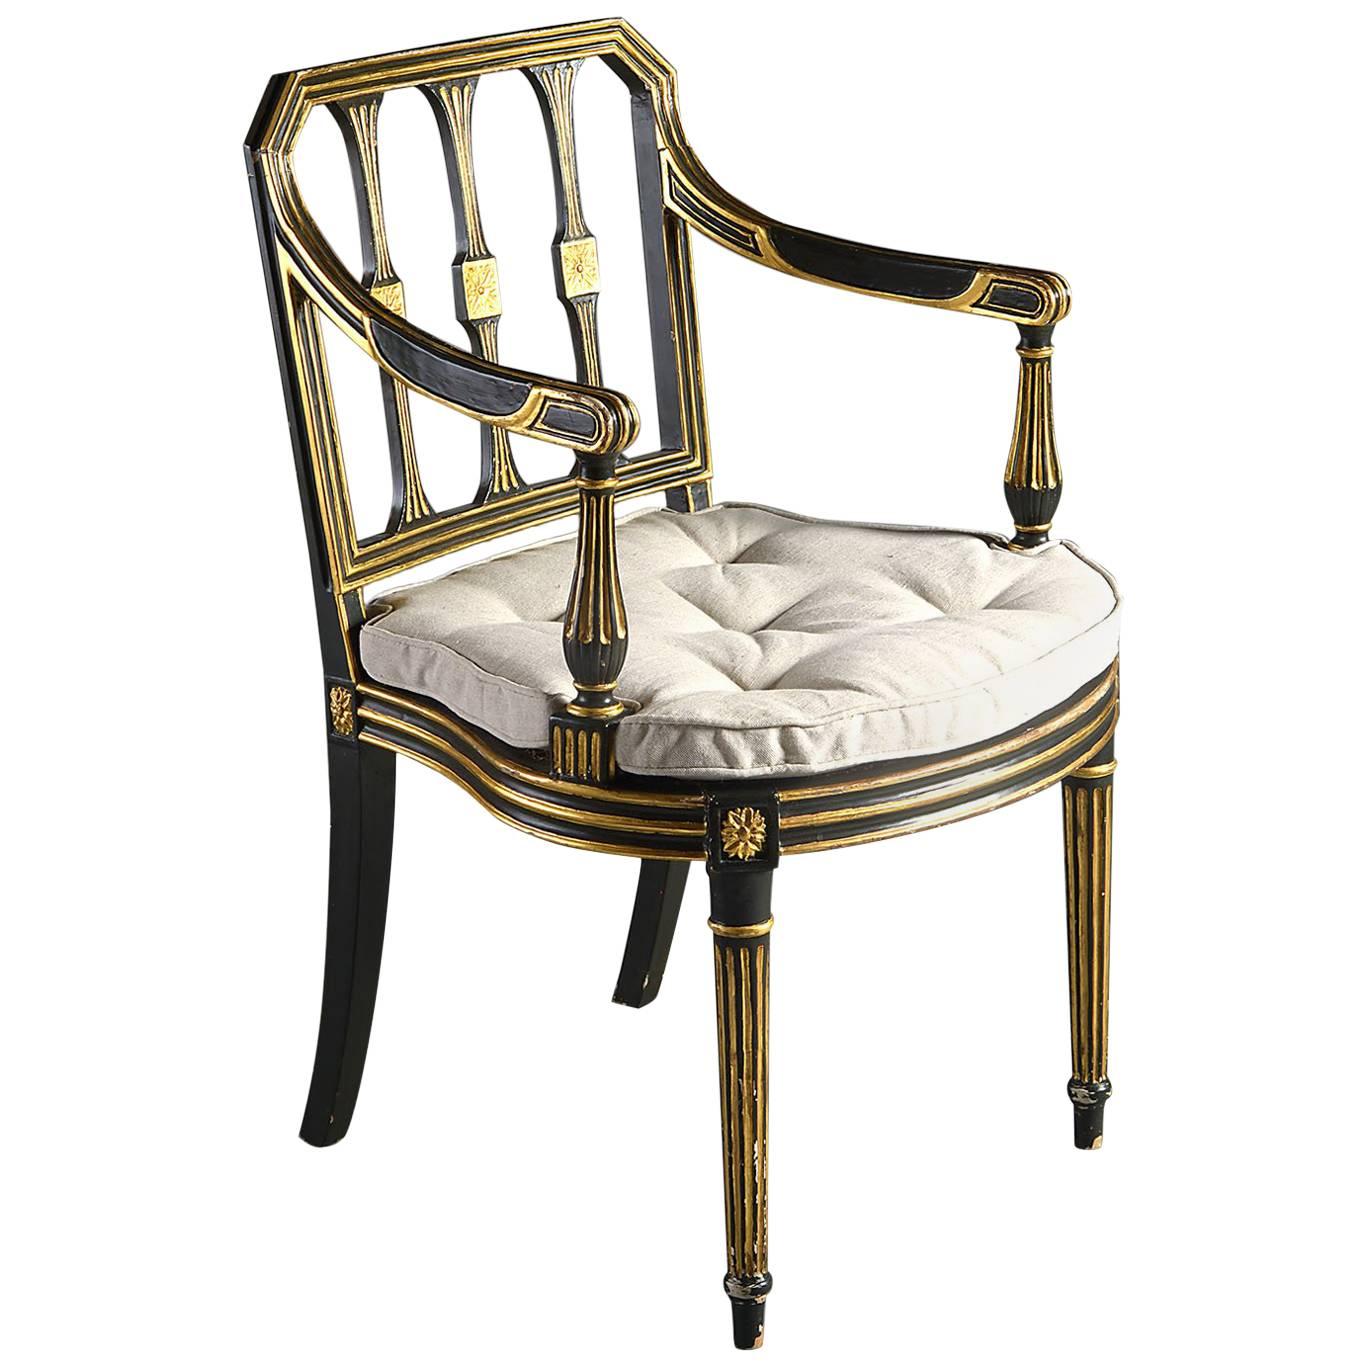 Early 19th Century Ebonized and Gilded Armchair